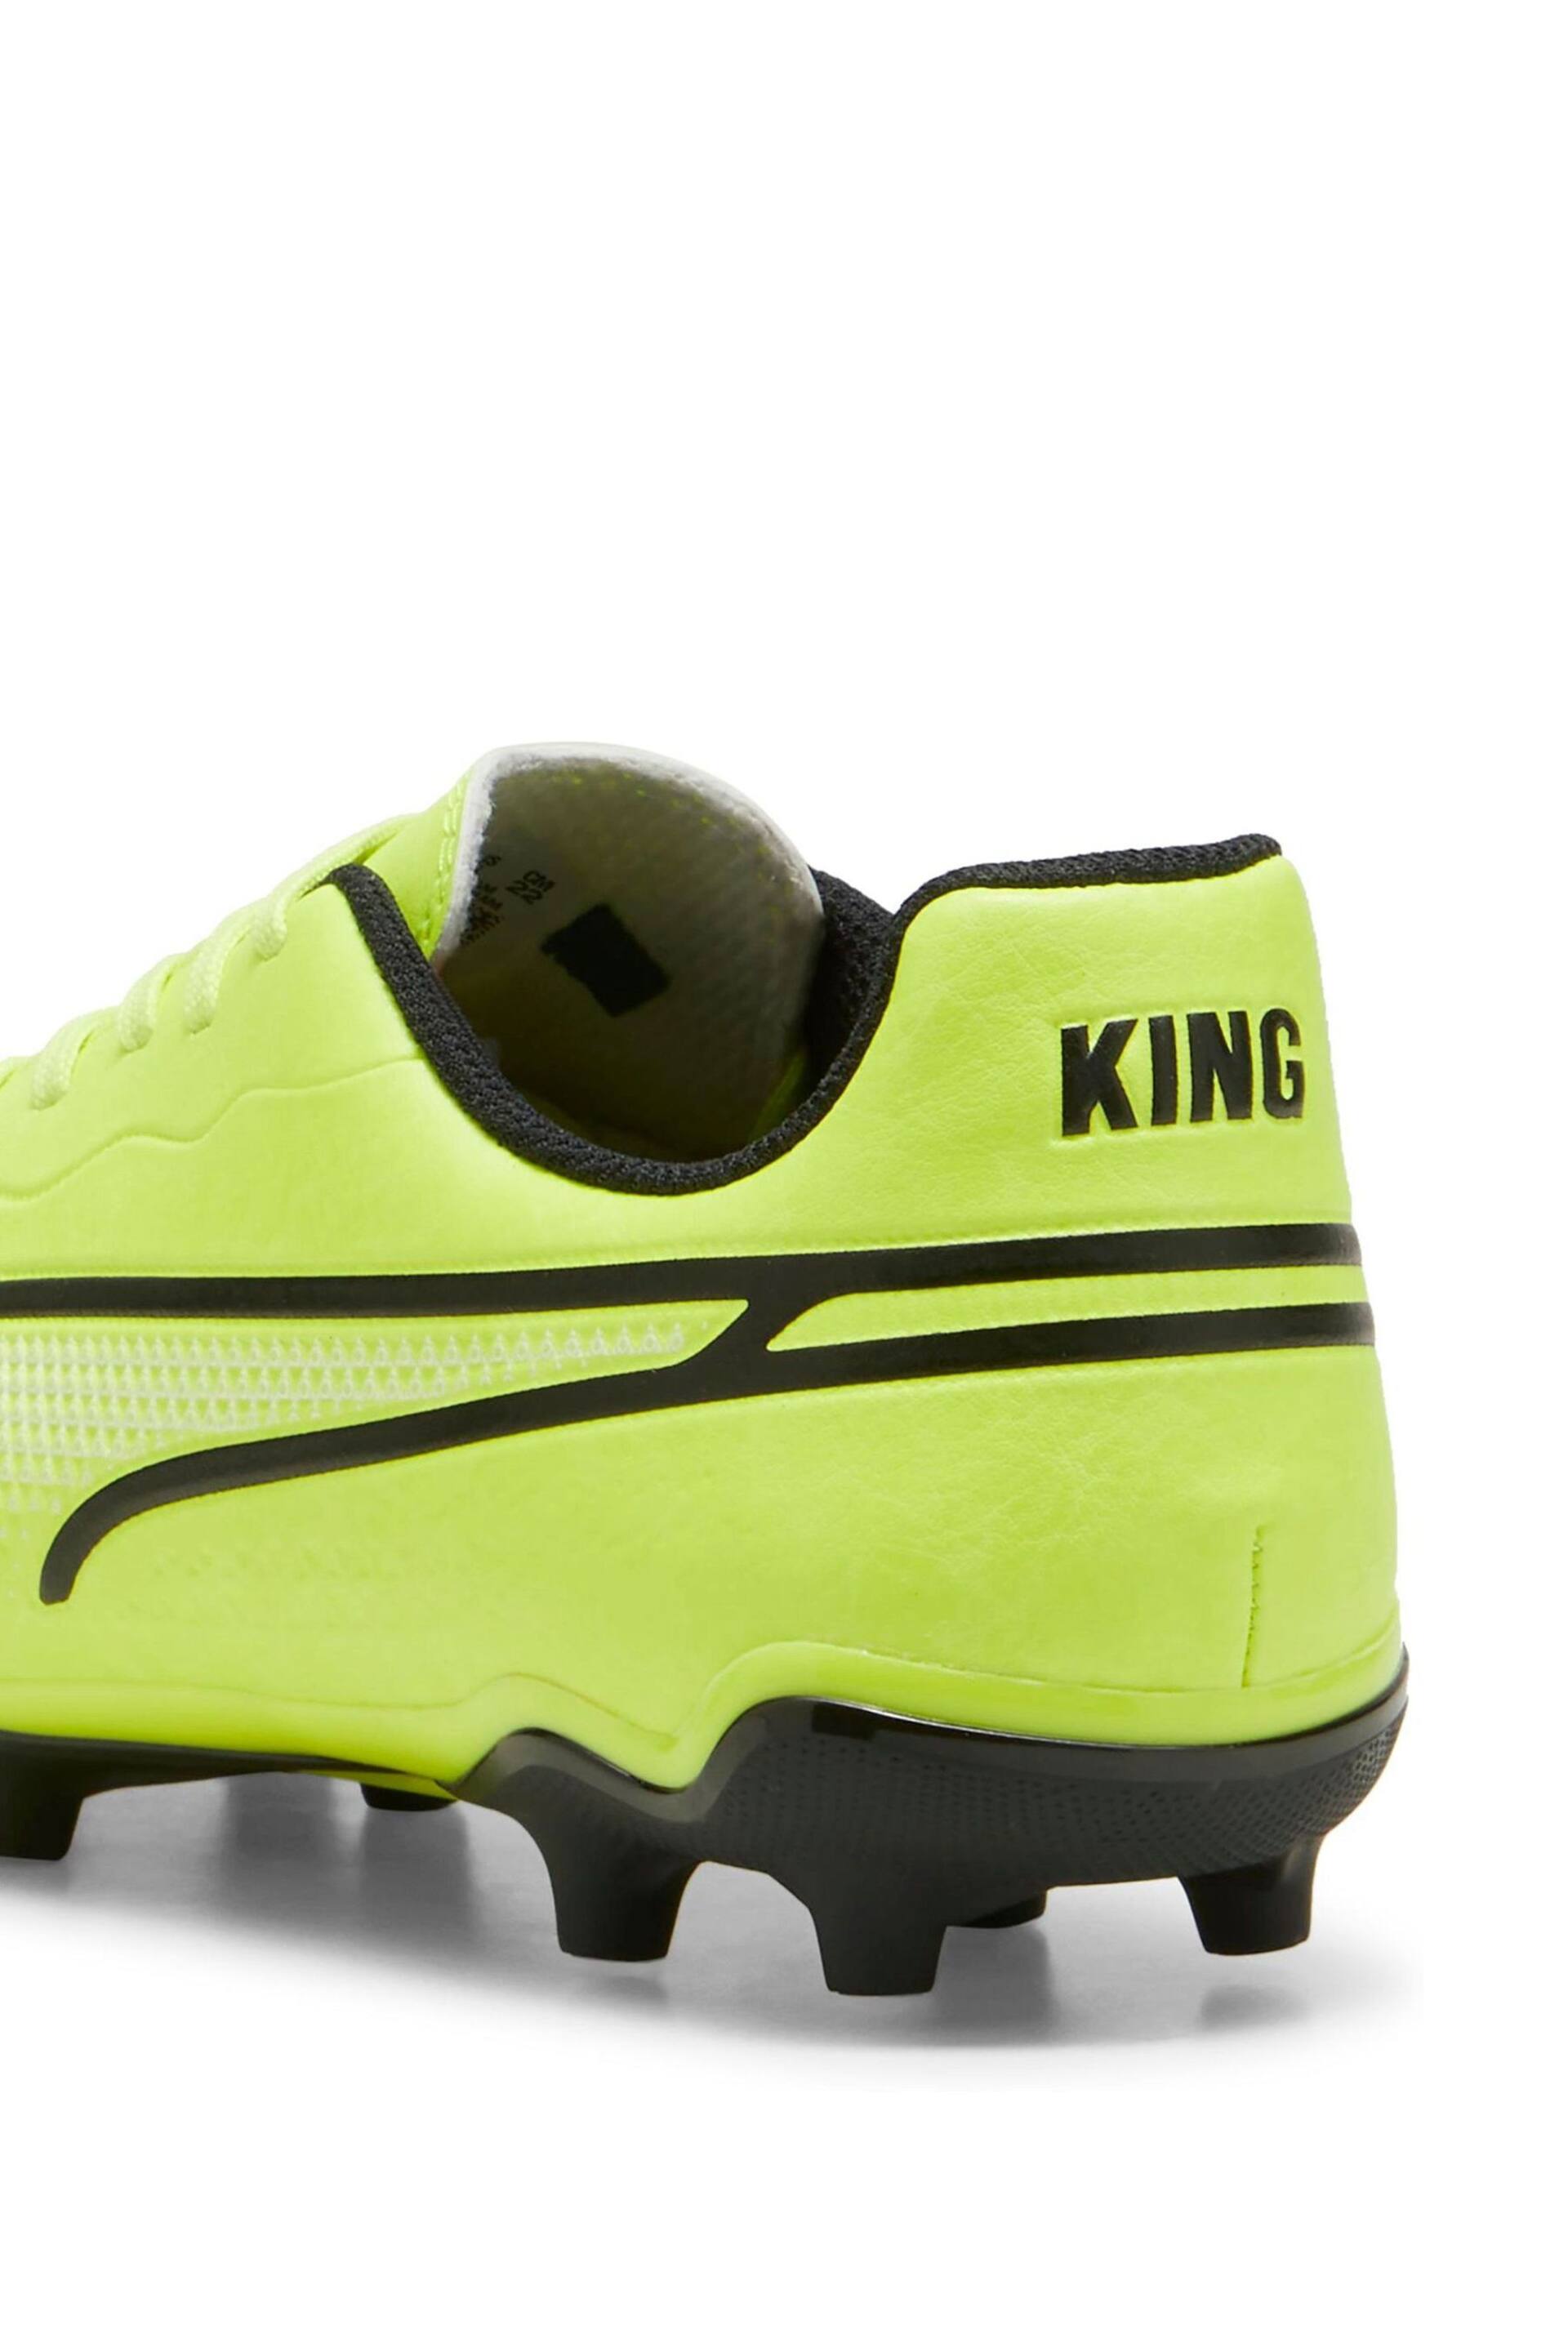 Puma Green Unisex Kids King Match Football Boots - Image 5 of 5